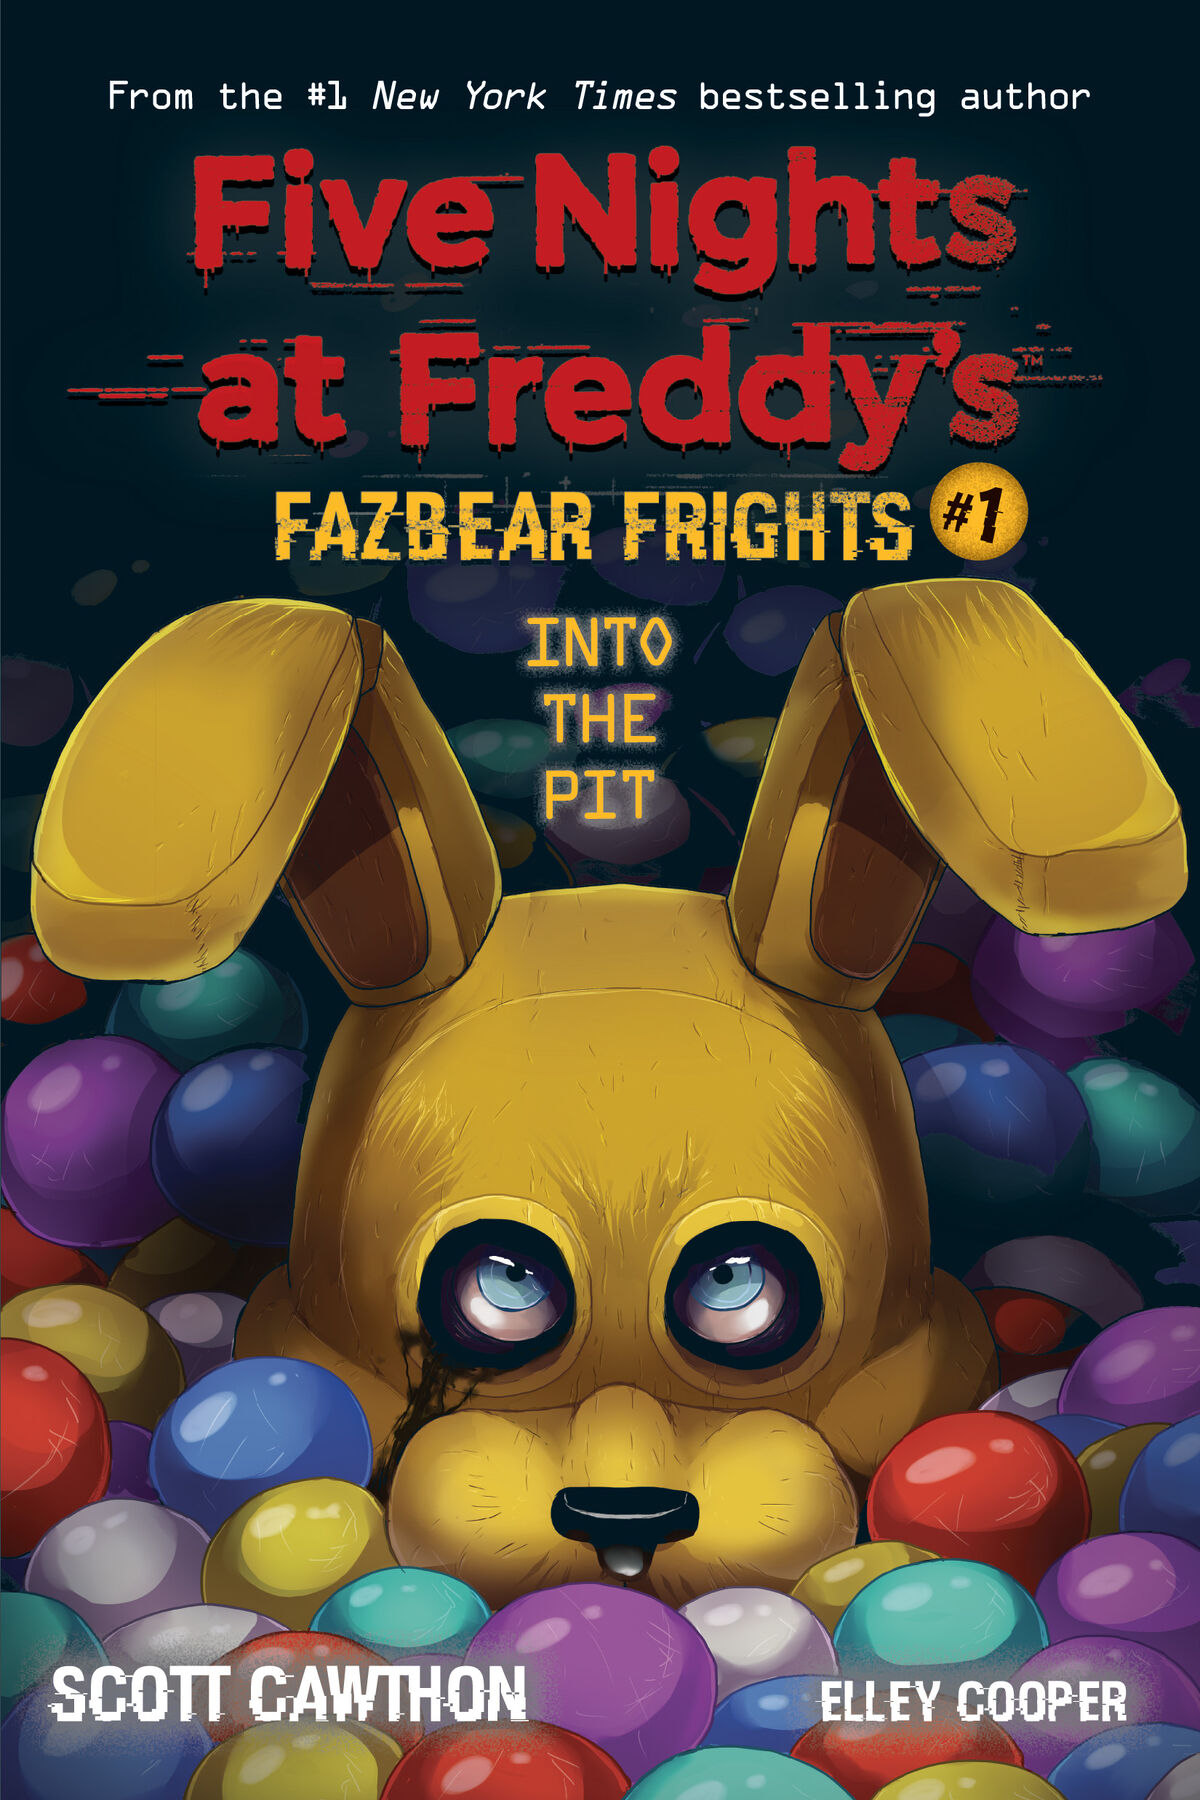 Freddy Fazbear, My FNAF 1, 2, 3, and 4 anime/manga online fan-art things!